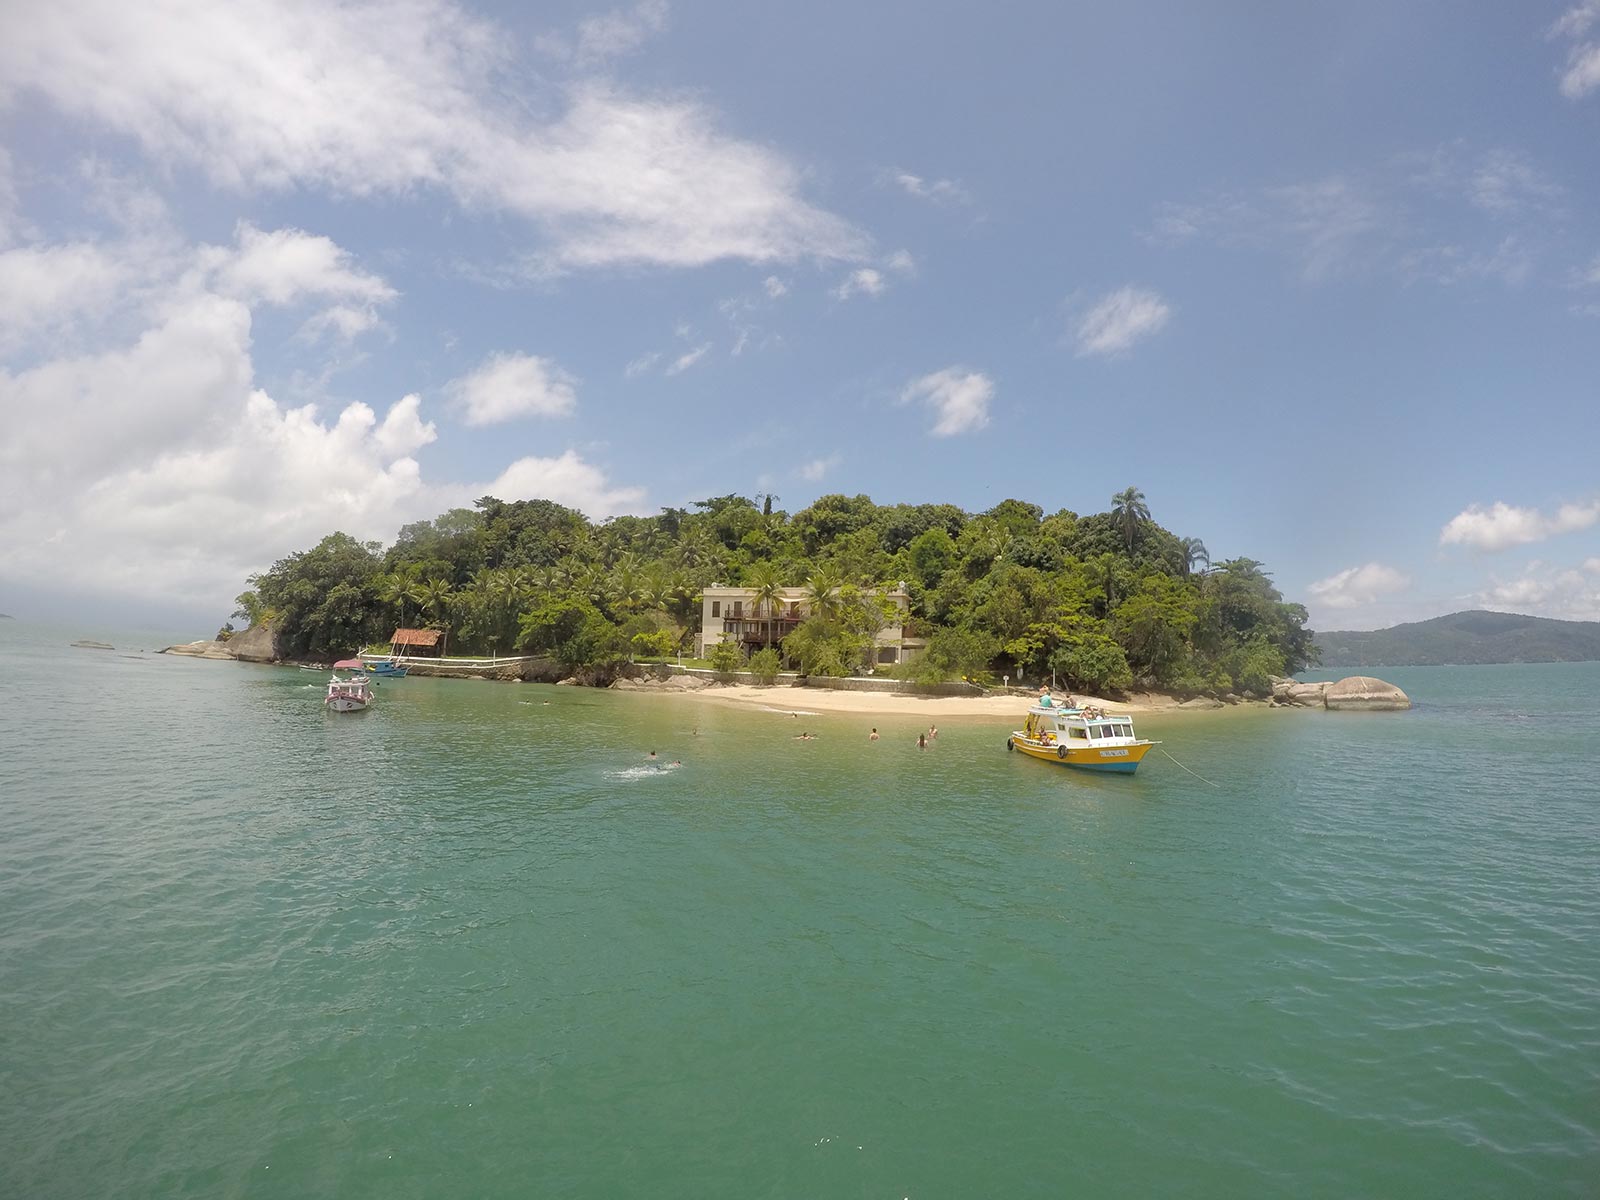 Small island with beach house in Paraty, Brazil. Rockfalls, Paraty boat party and nearly losing my head